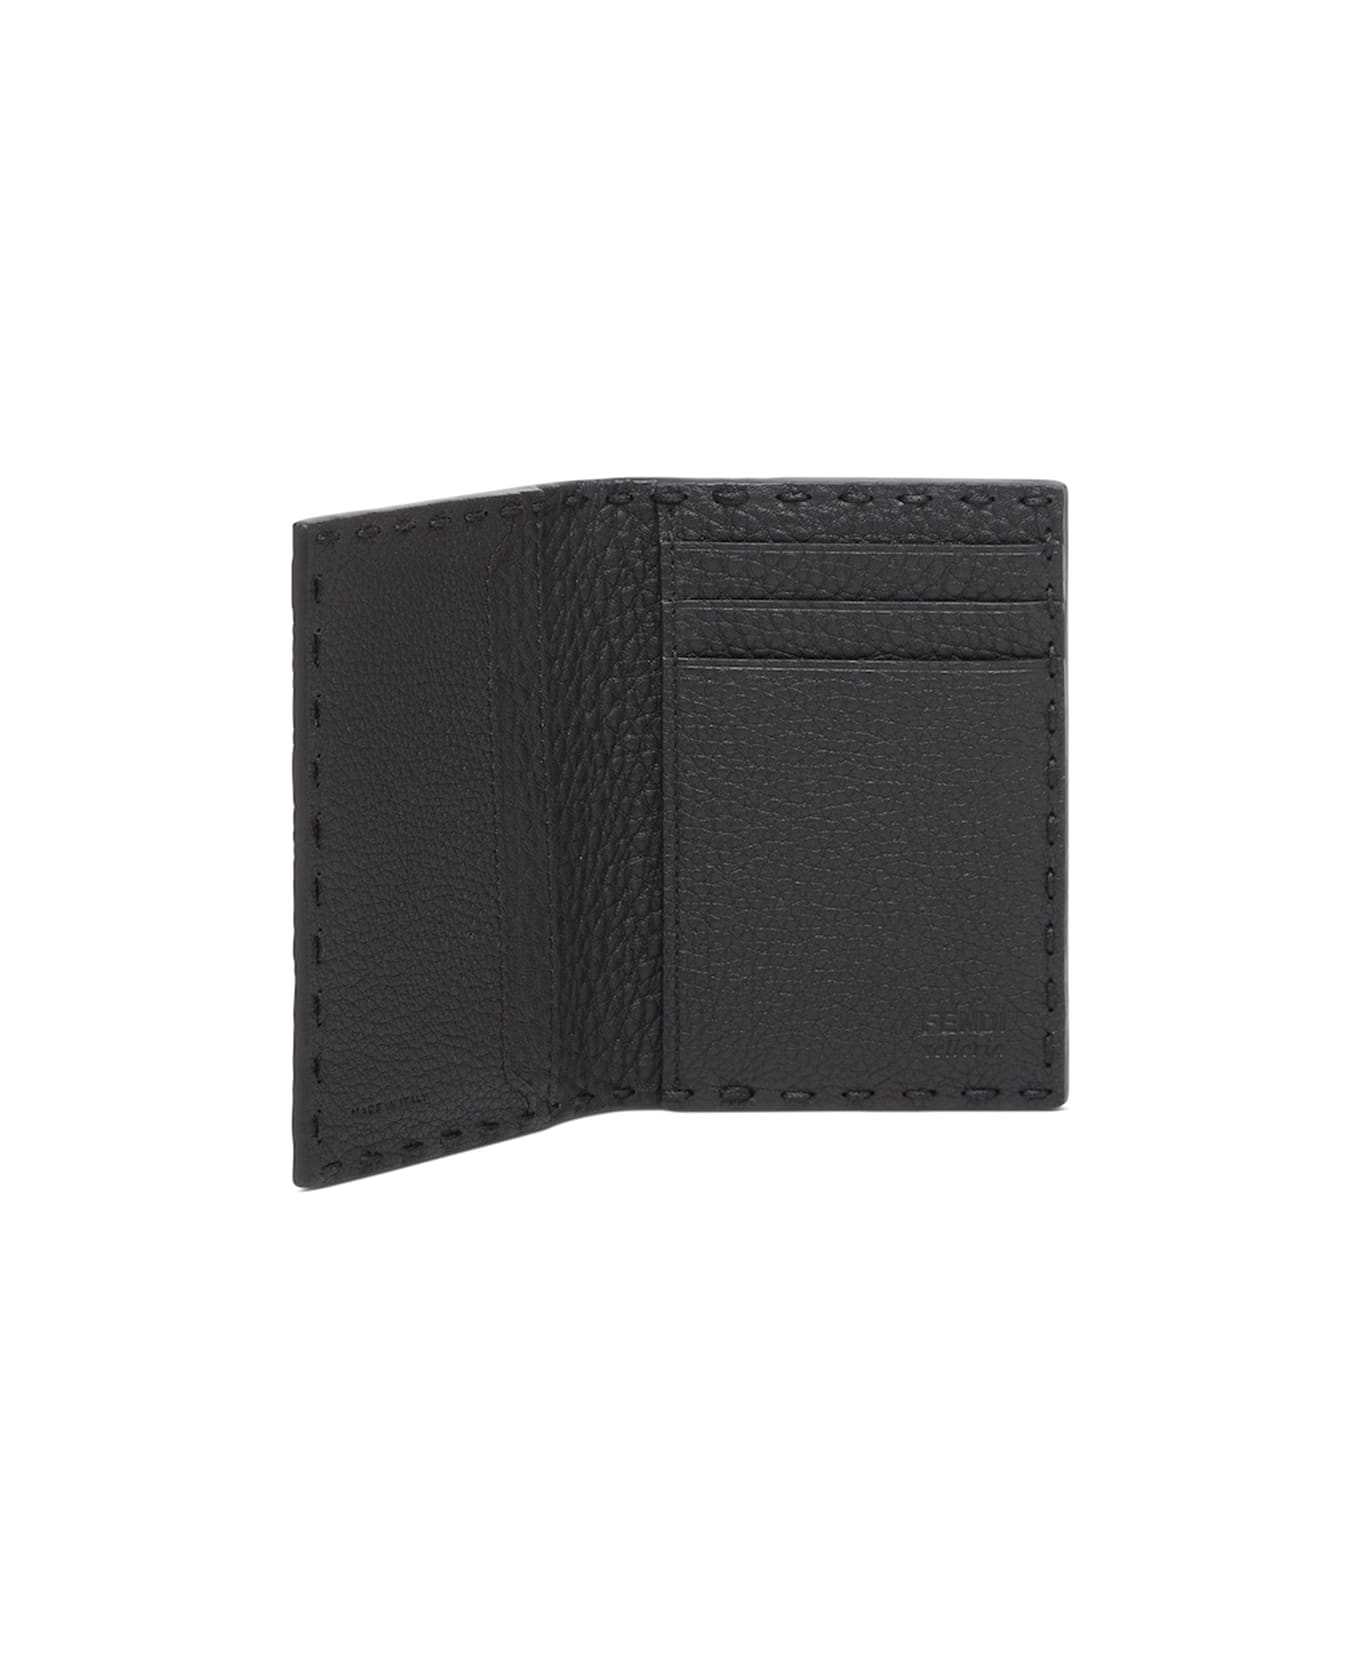 Fendi Black Leather Card Holder - NERO PALLADIO